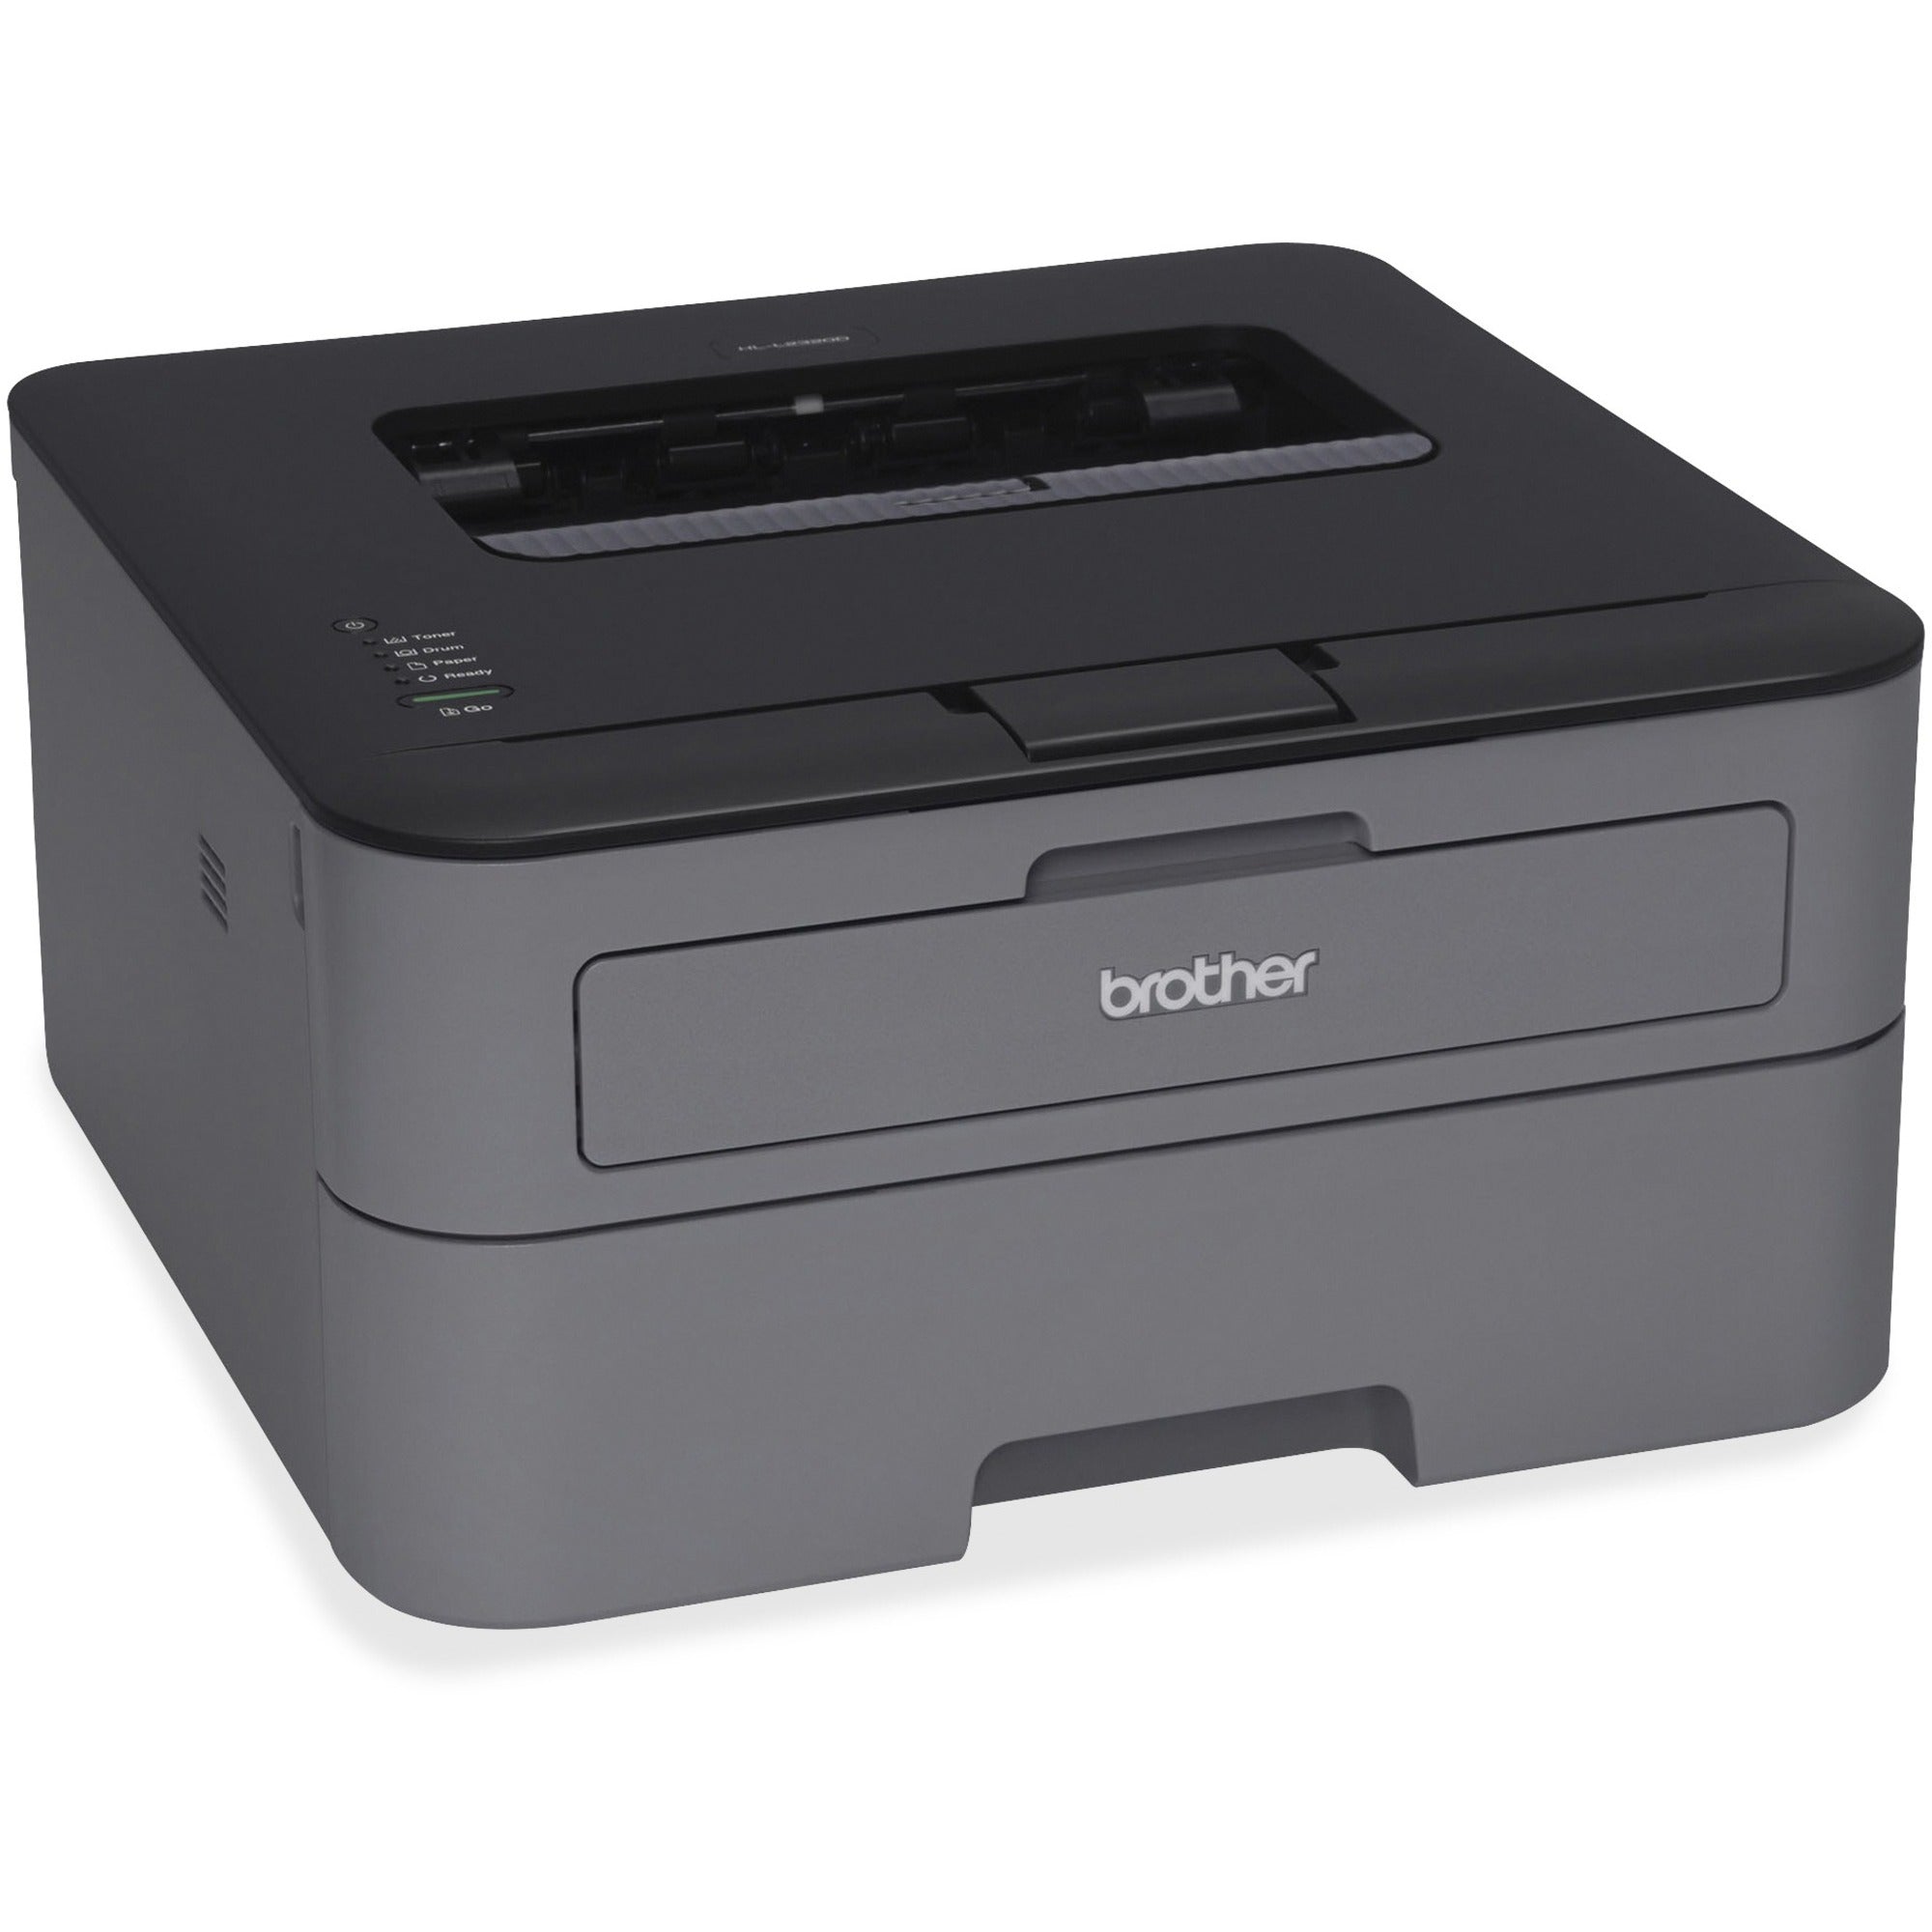 Brother HL-L2300D Laser Printer - Monochrome - Duplex - Laser Printer - 2400 x 600 dpi - 26 ppm Mono Print - USB 2.0 - 1